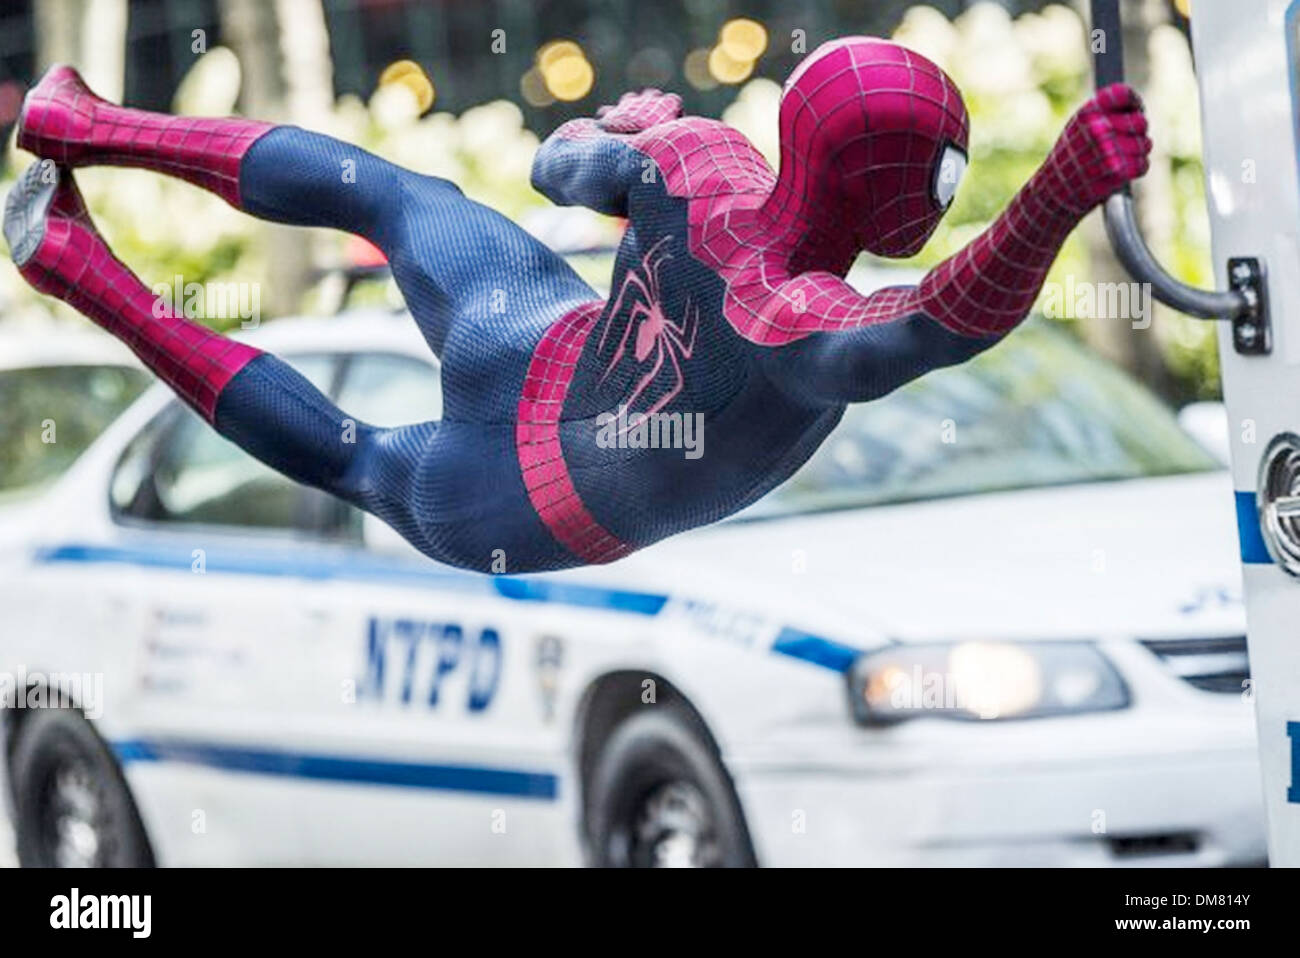 The Amazing Spider-Man 2 (2014) - Filmaffinity